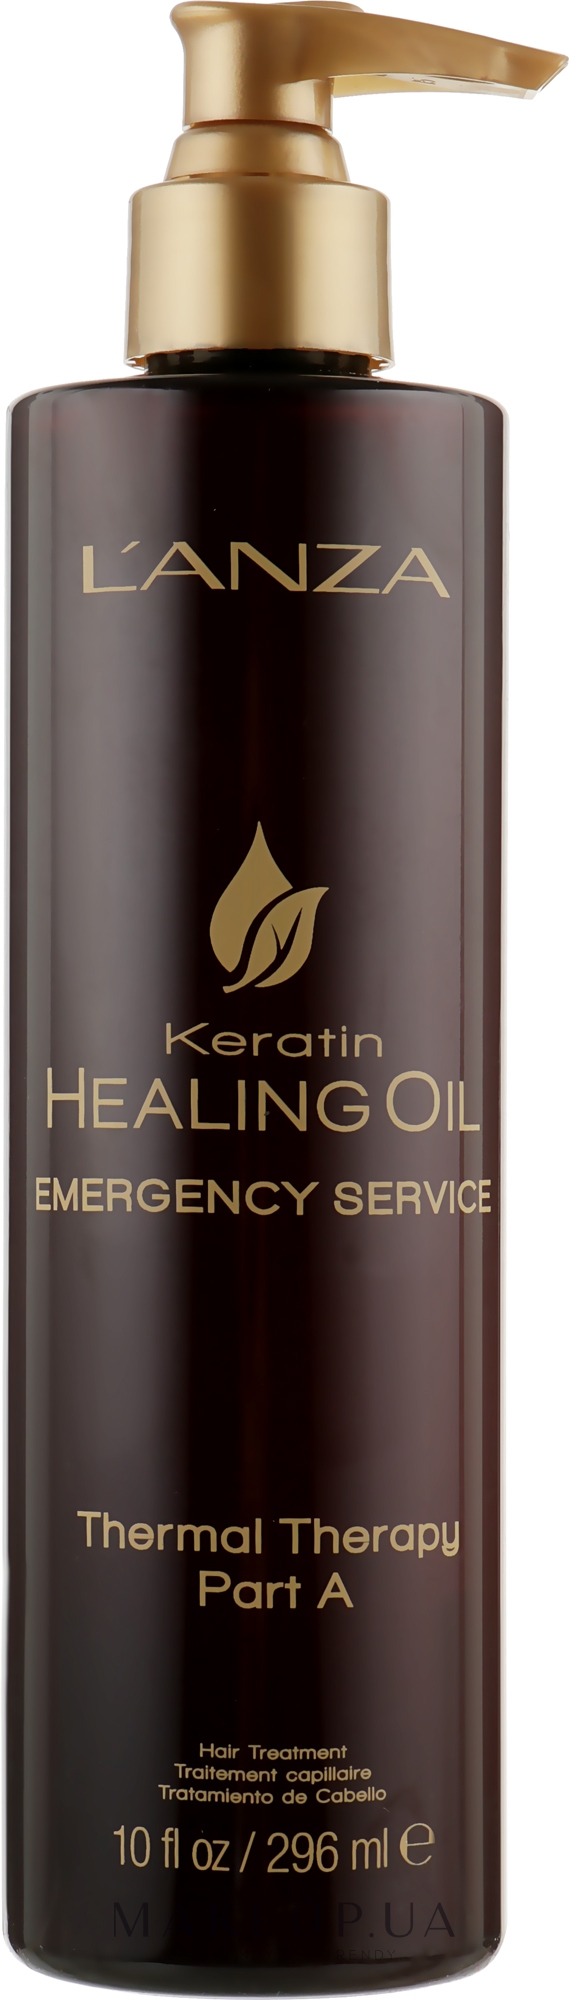 Термальная терапия (шаг А) - L'anza Keratin Healing Oil Emergency Service Thermal Therapy Part A  — фото 296ml